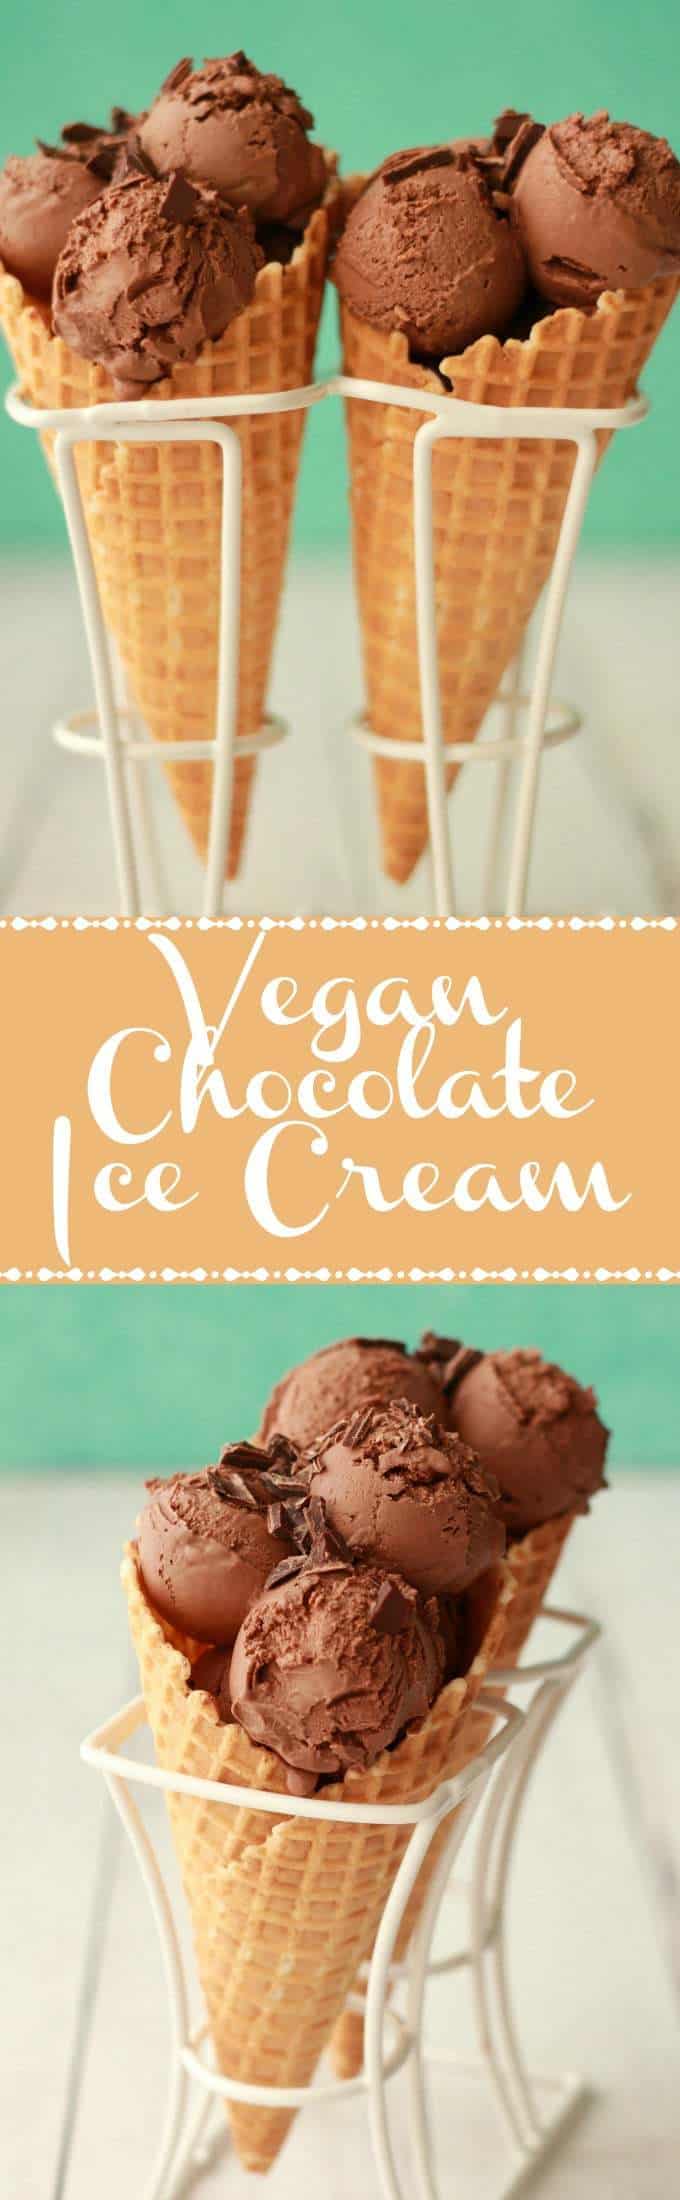 The Most Decadent Vegan Chocolate Ice Cream #vegan #lovingitvegan #icecream #chocolate #dessert #dairyfree #glutenfree